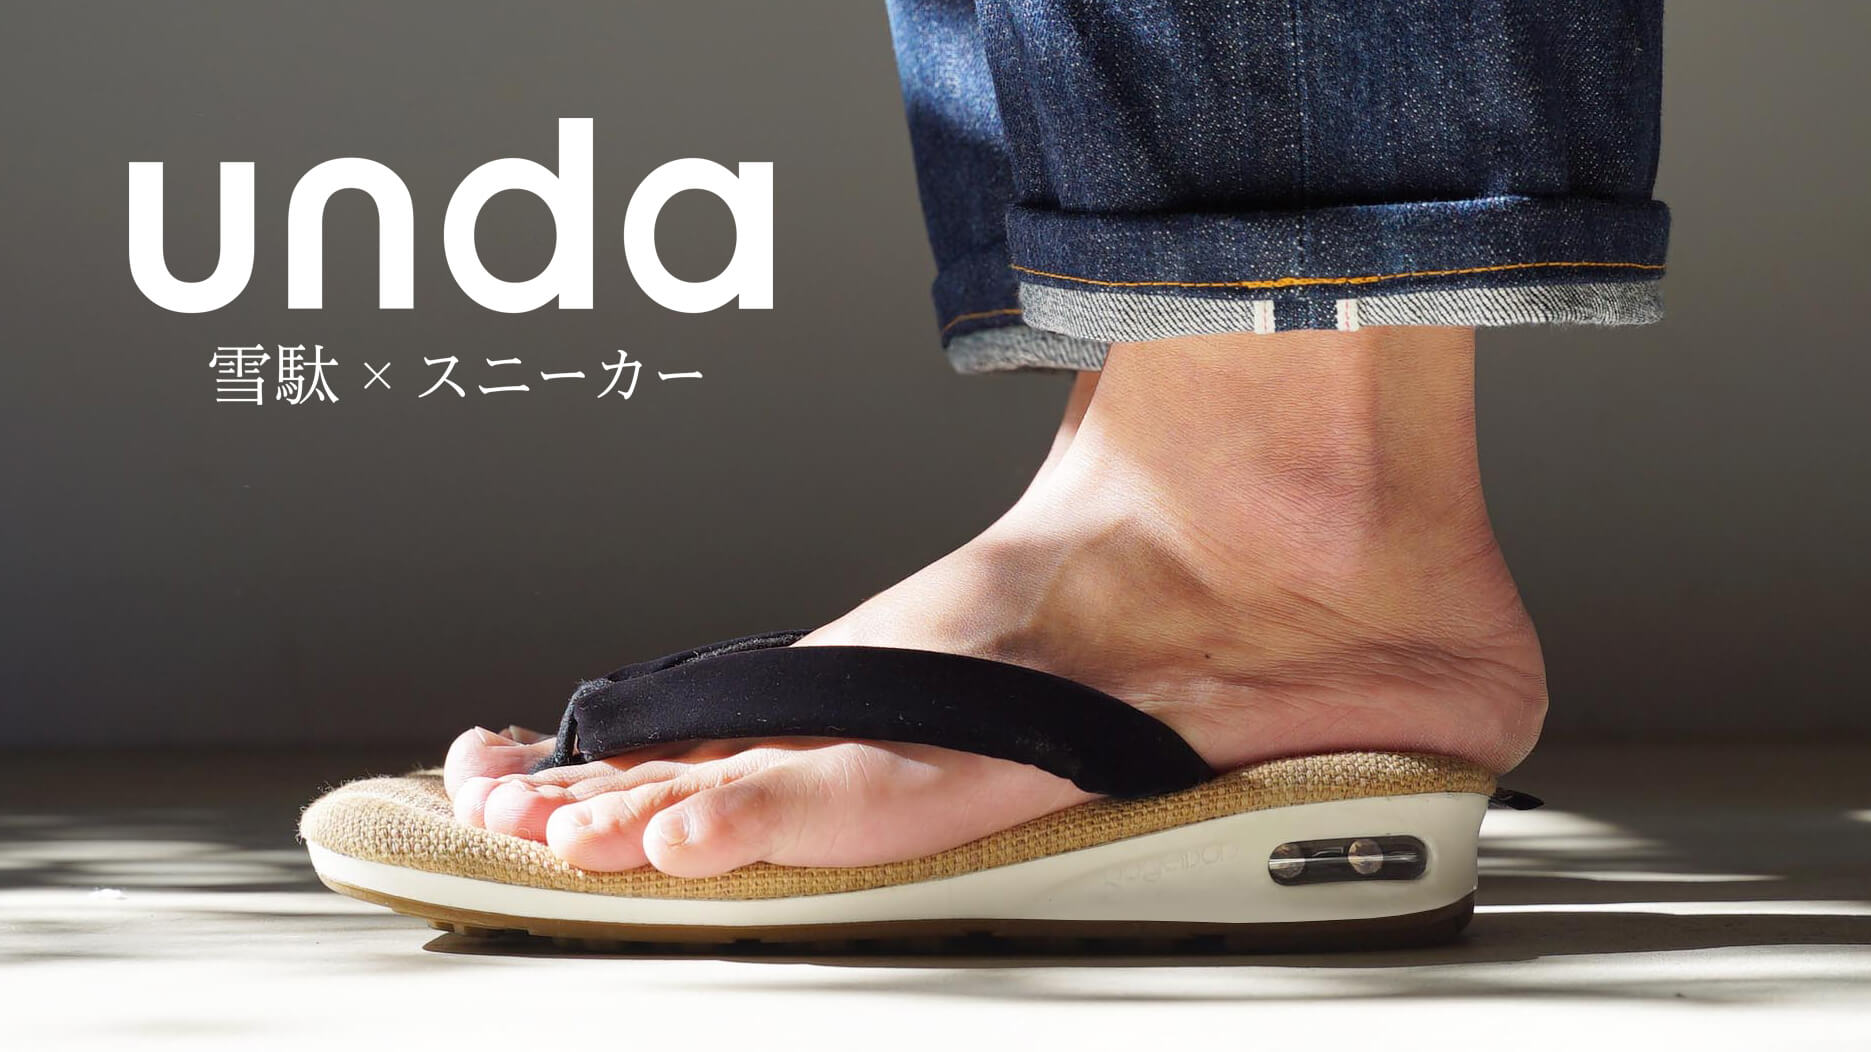 unda -雲駄- setta sneaker スニーカー| もしもしにっぽん| MOSHI